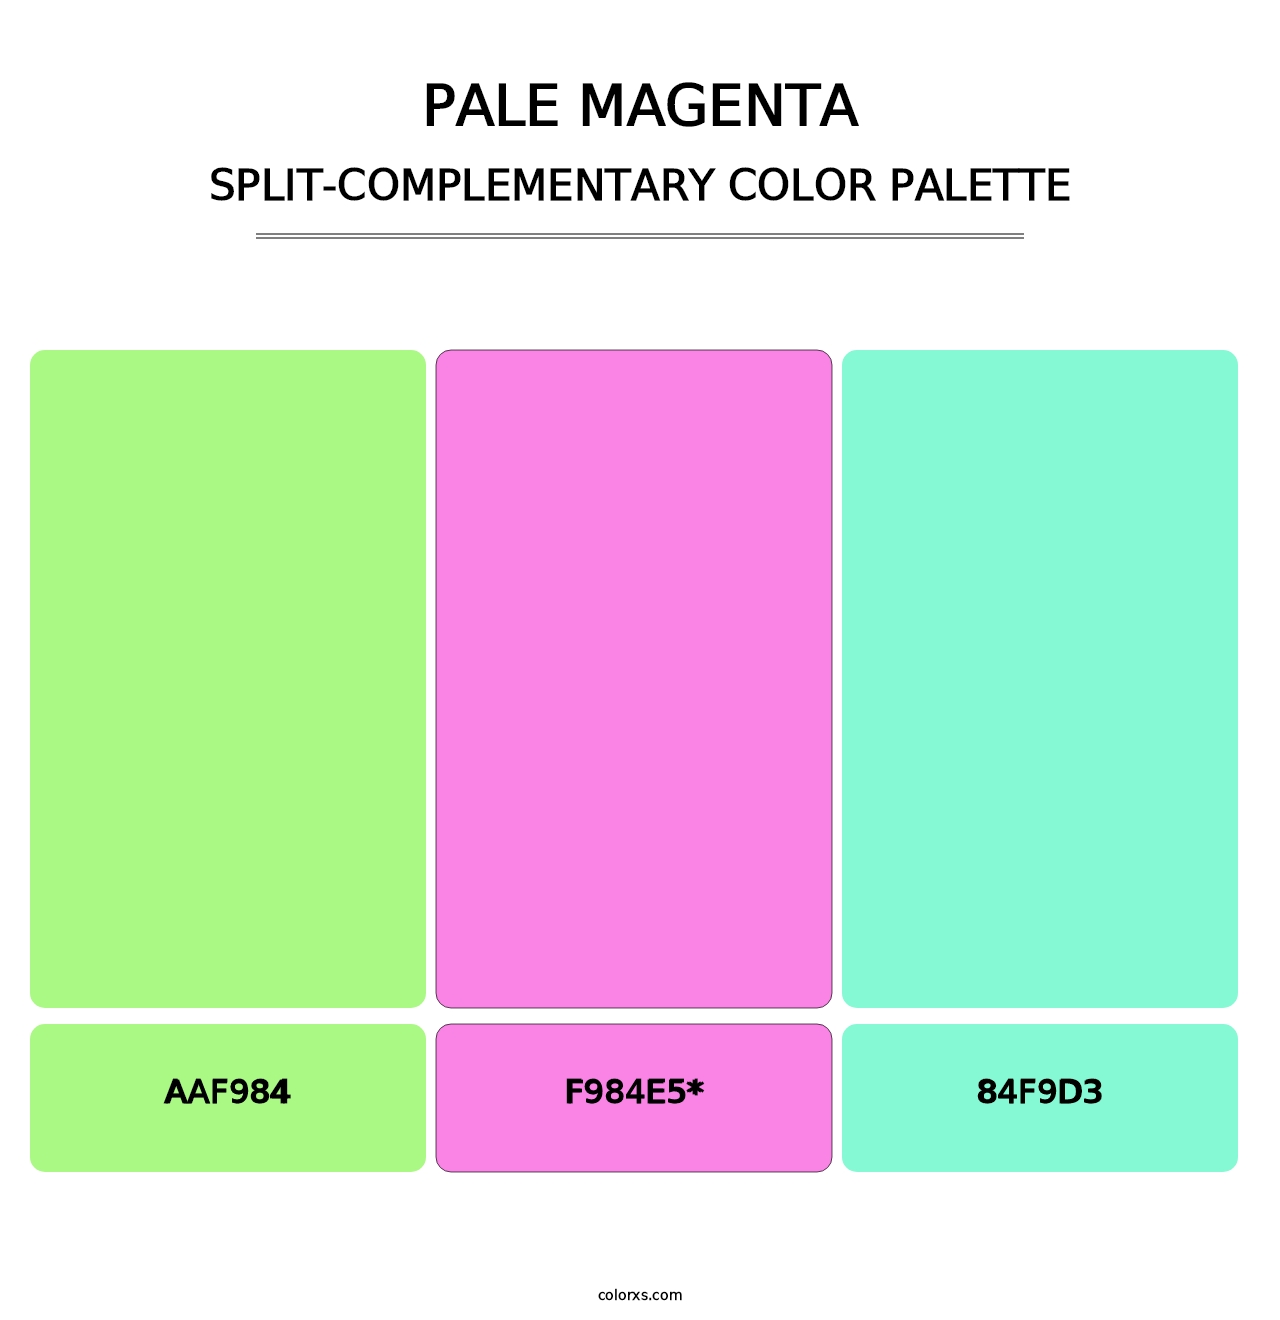 Pale Magenta - Split-Complementary Color Palette